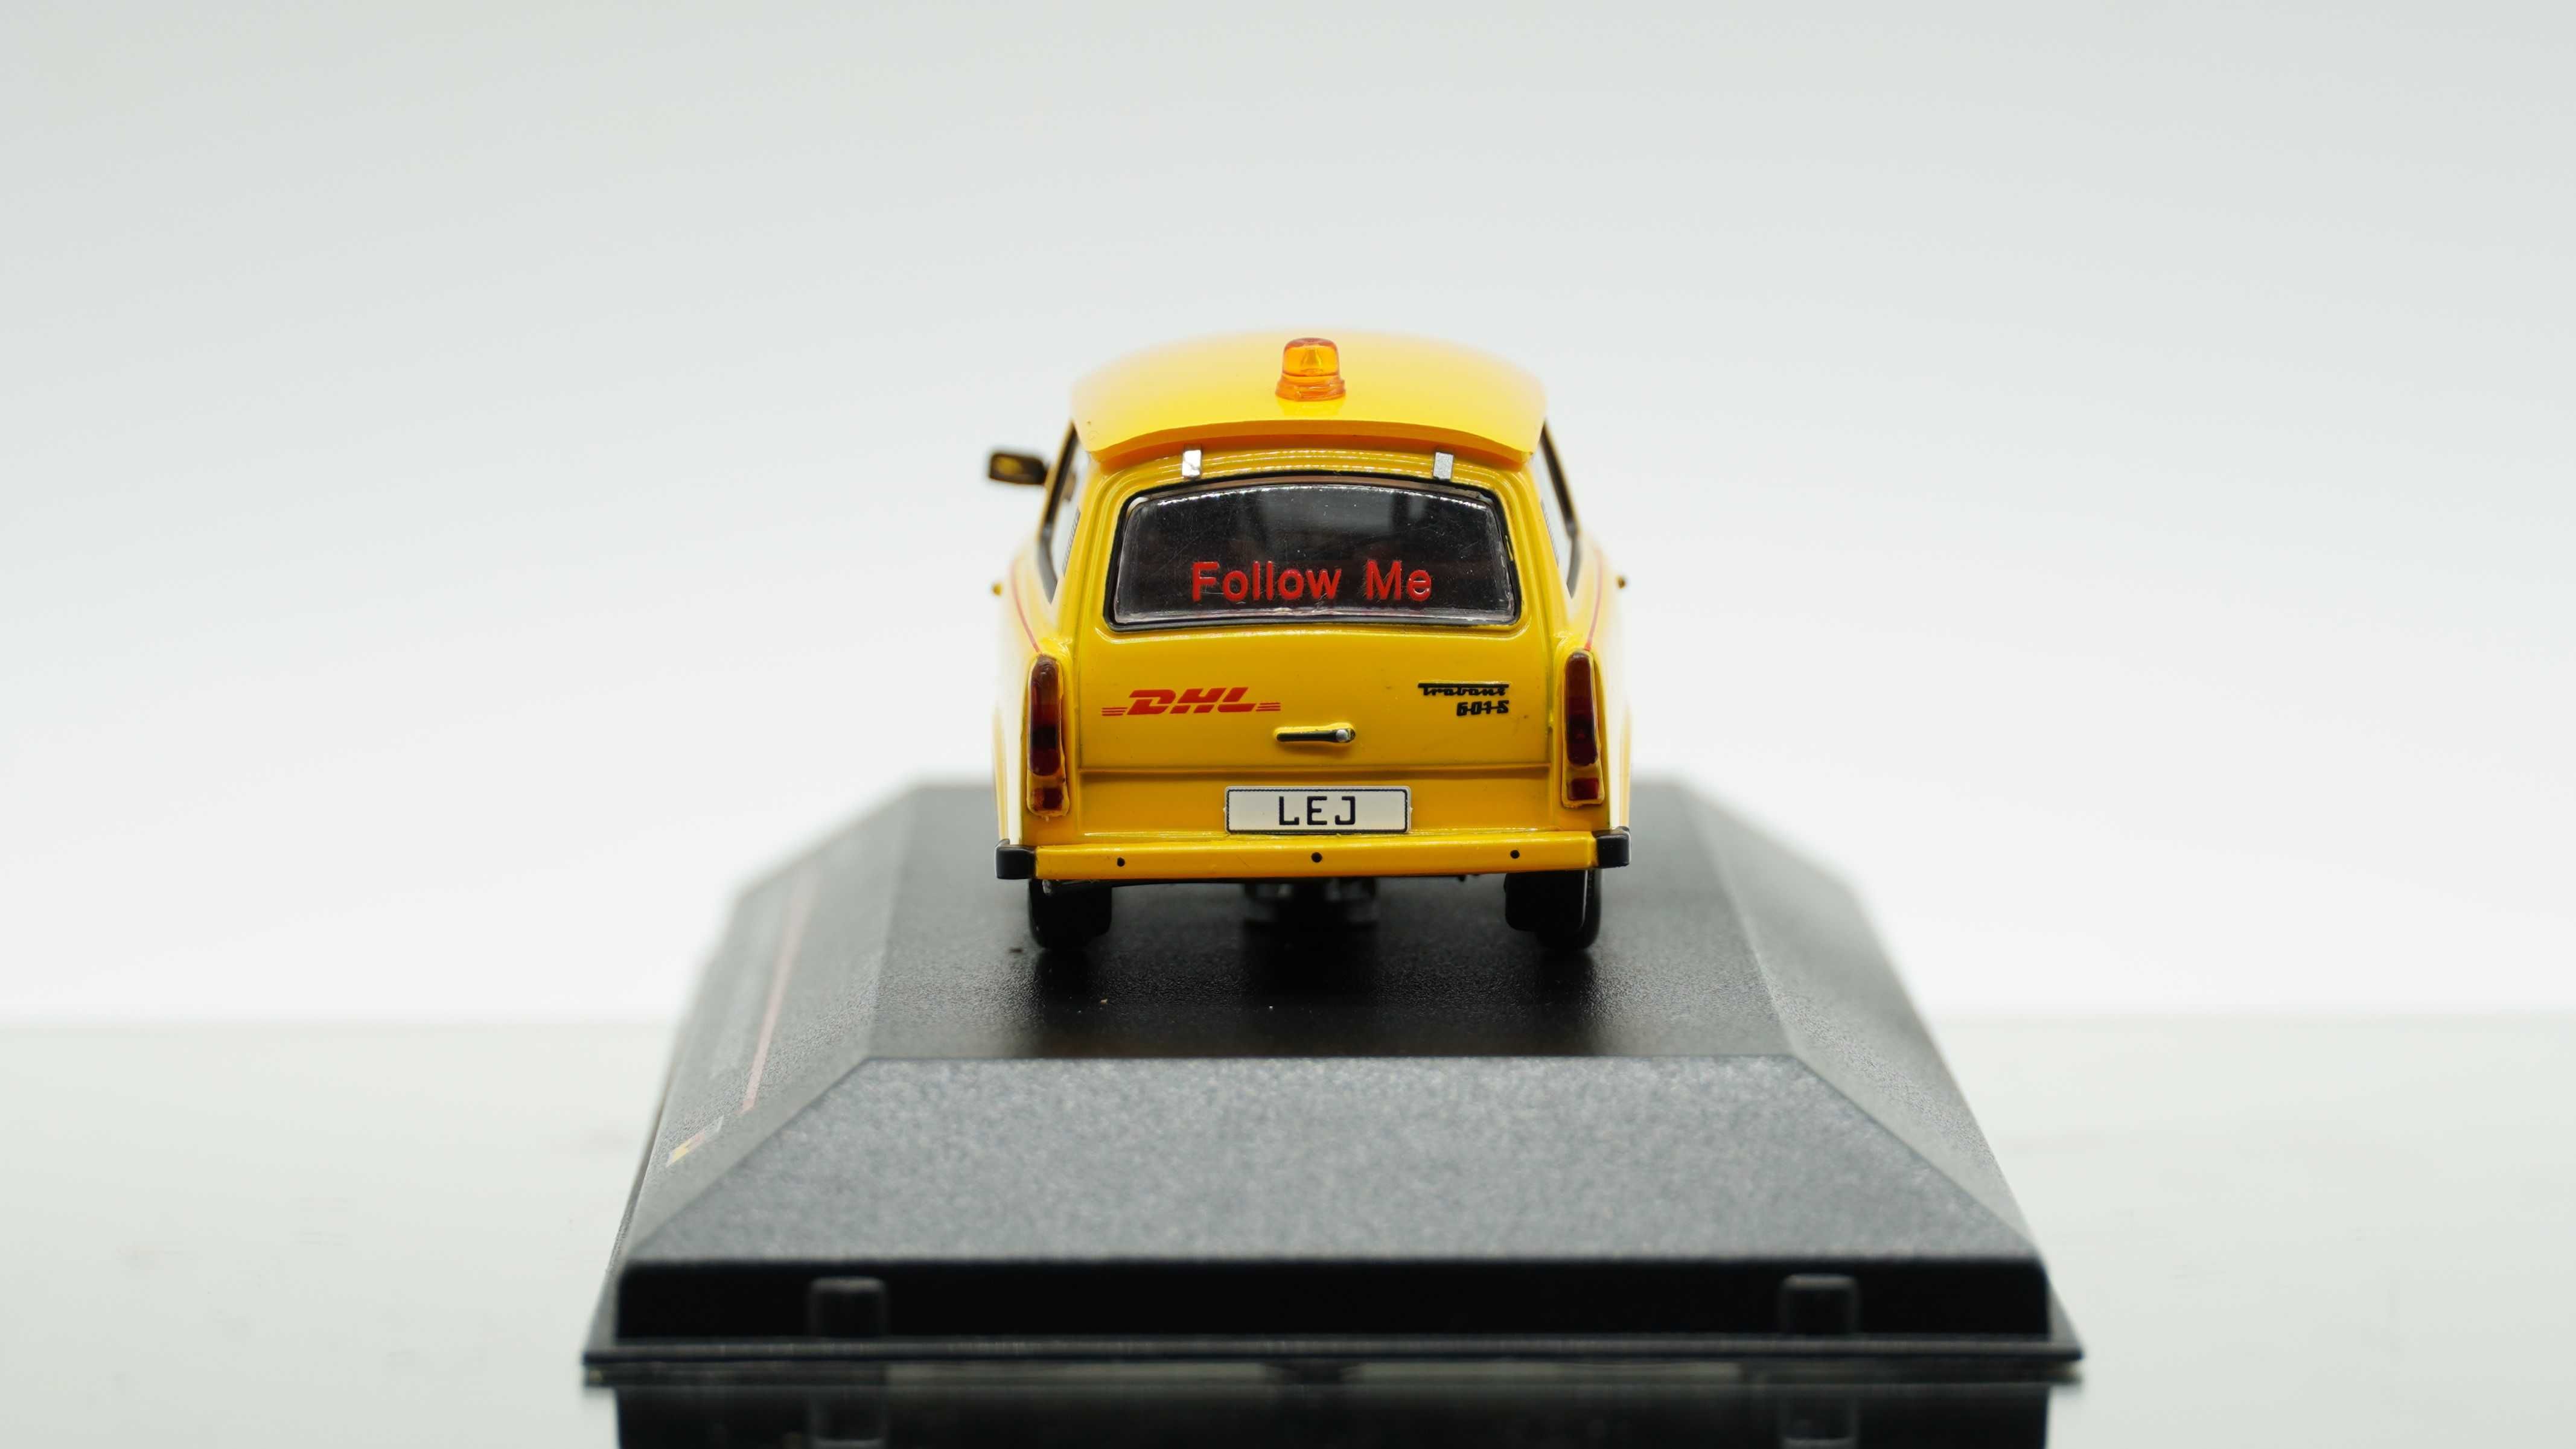 2001 Trabant 601S  - Follow Me DHL Hub Leipzig - Ist Models 1/43